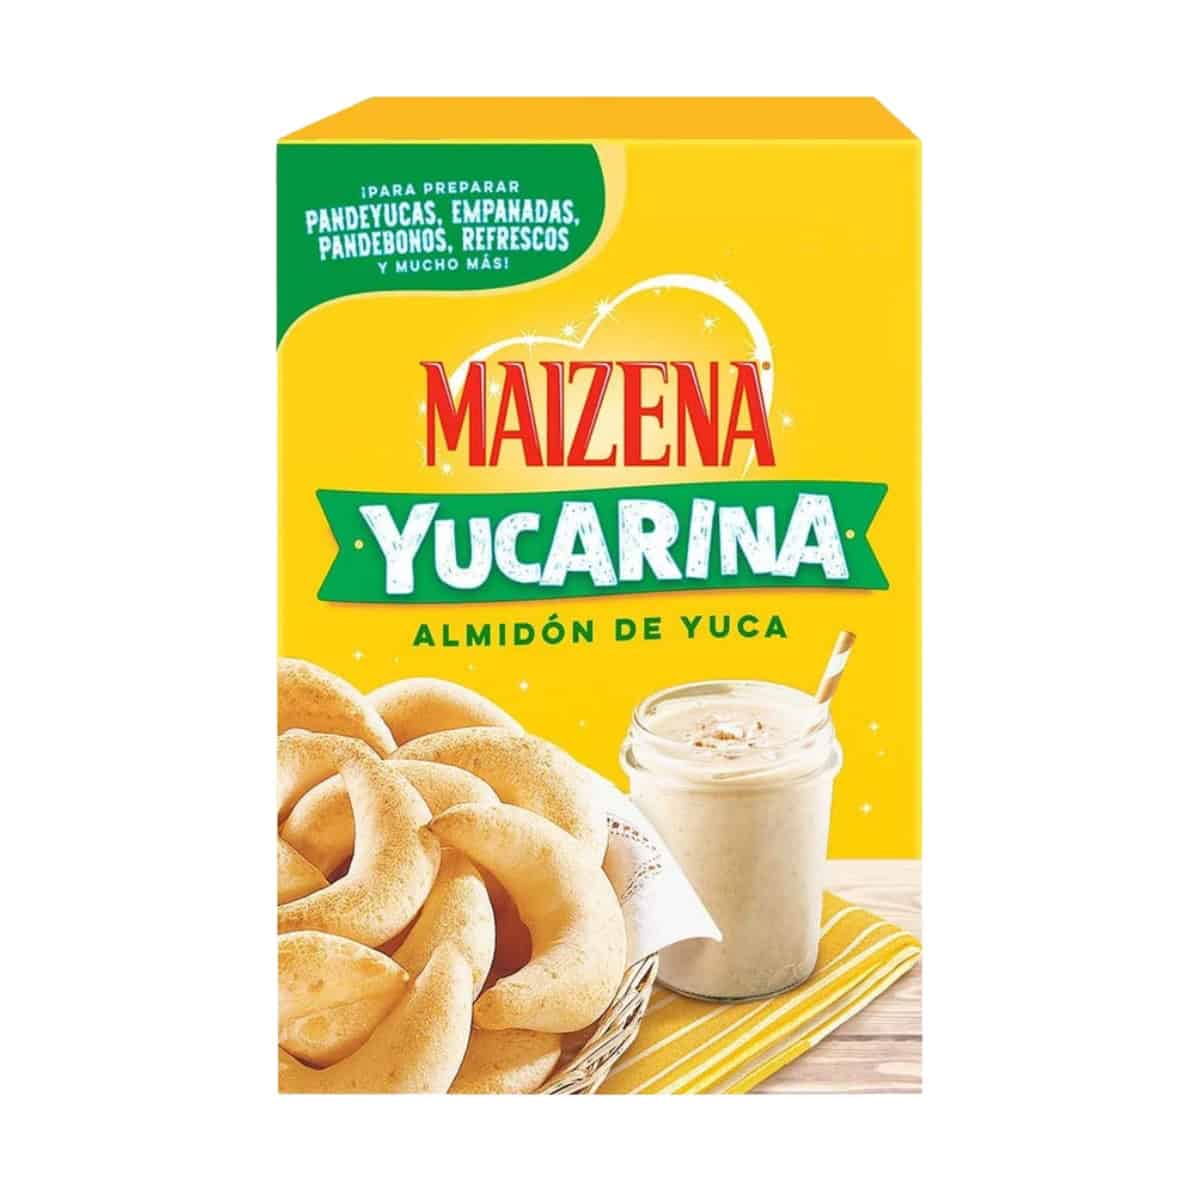 Buy Maizena Yucarina Almidón De Yuca (Cassava Starch) - 300 gm